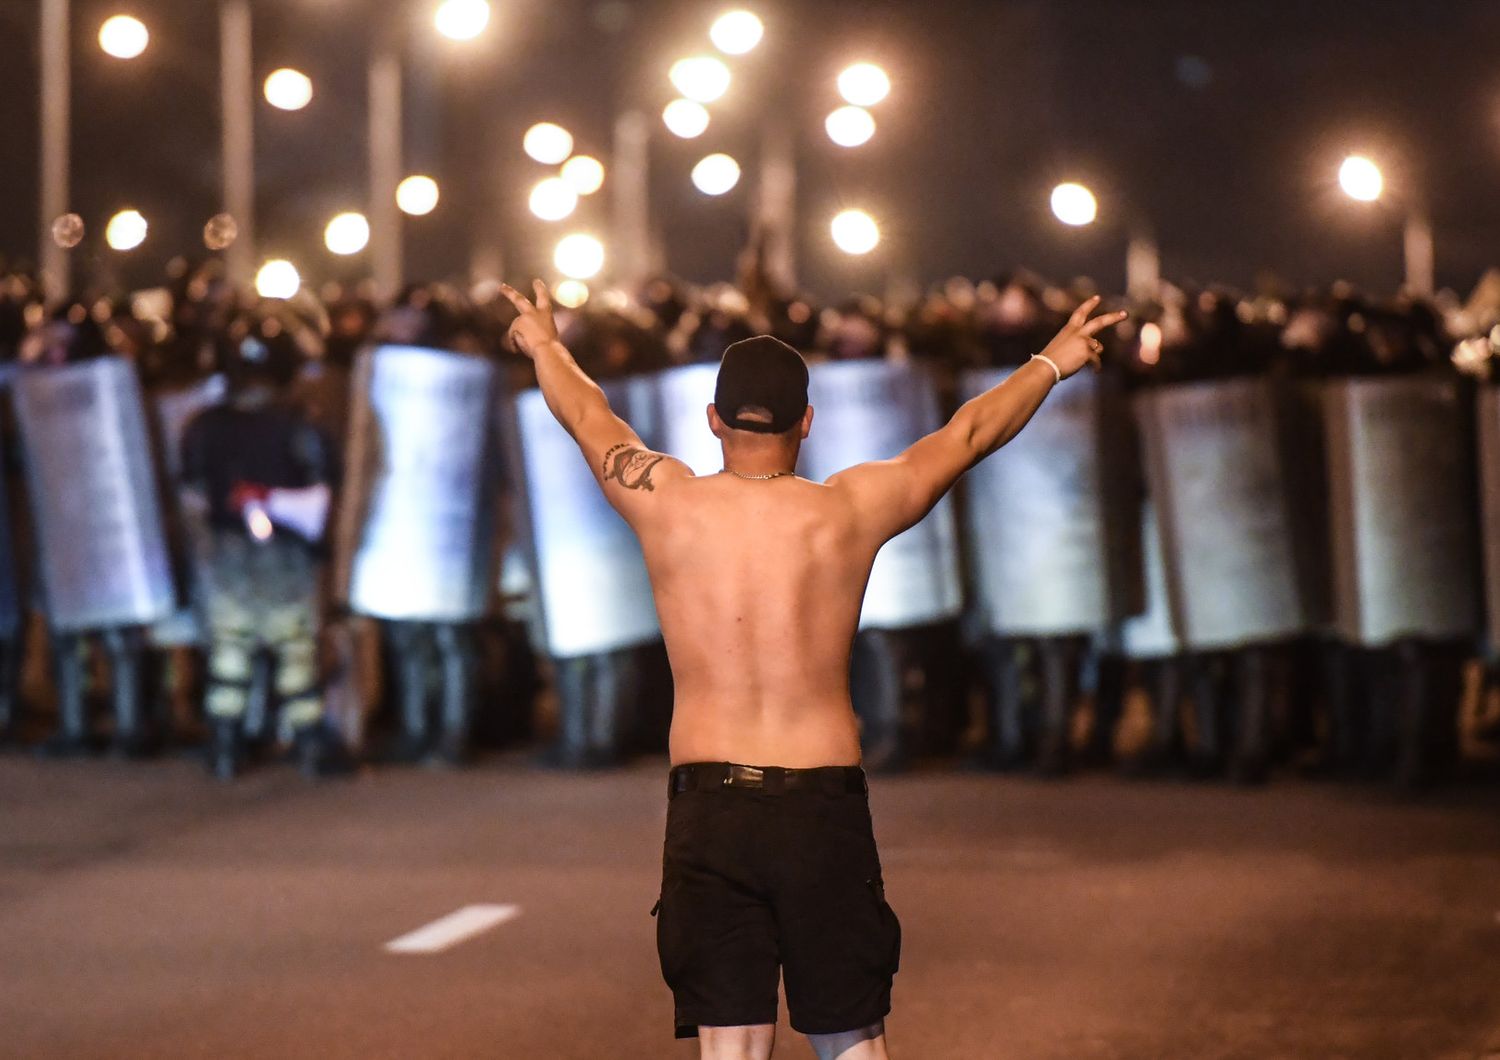 Proteste a Minsk